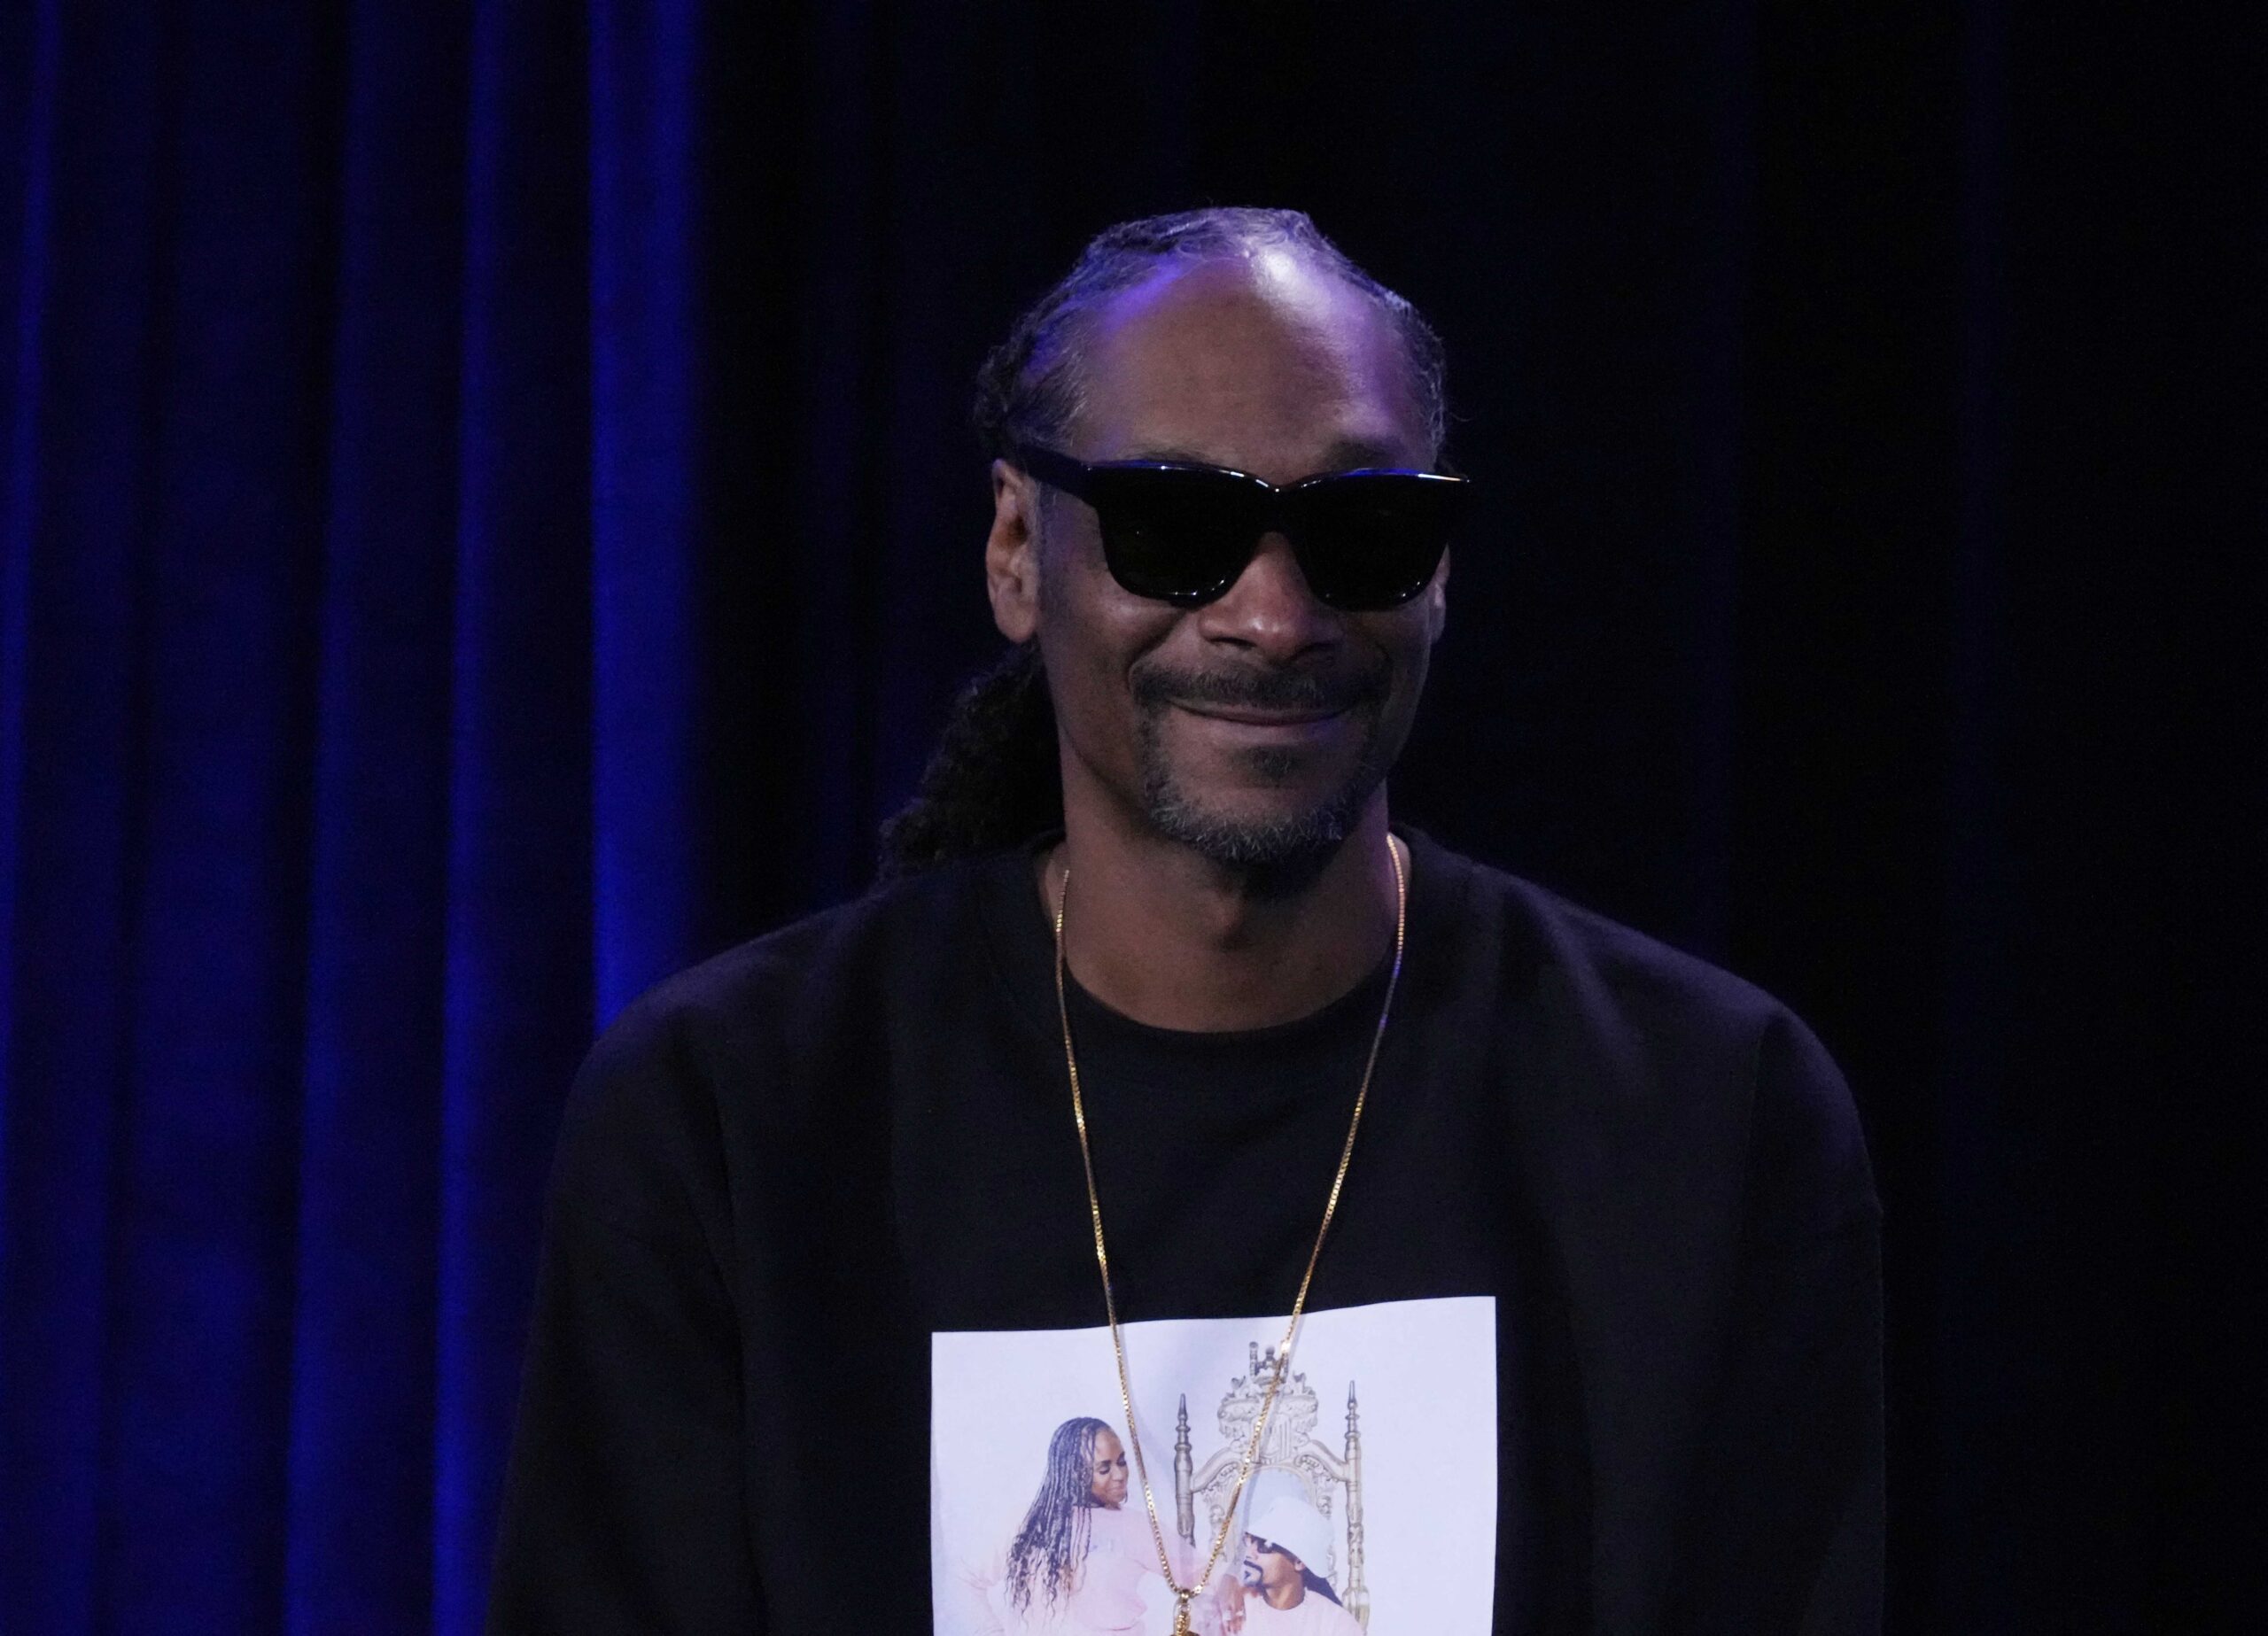 Snoop Dogg’s team calls sexual assault allegations ‘meritless’